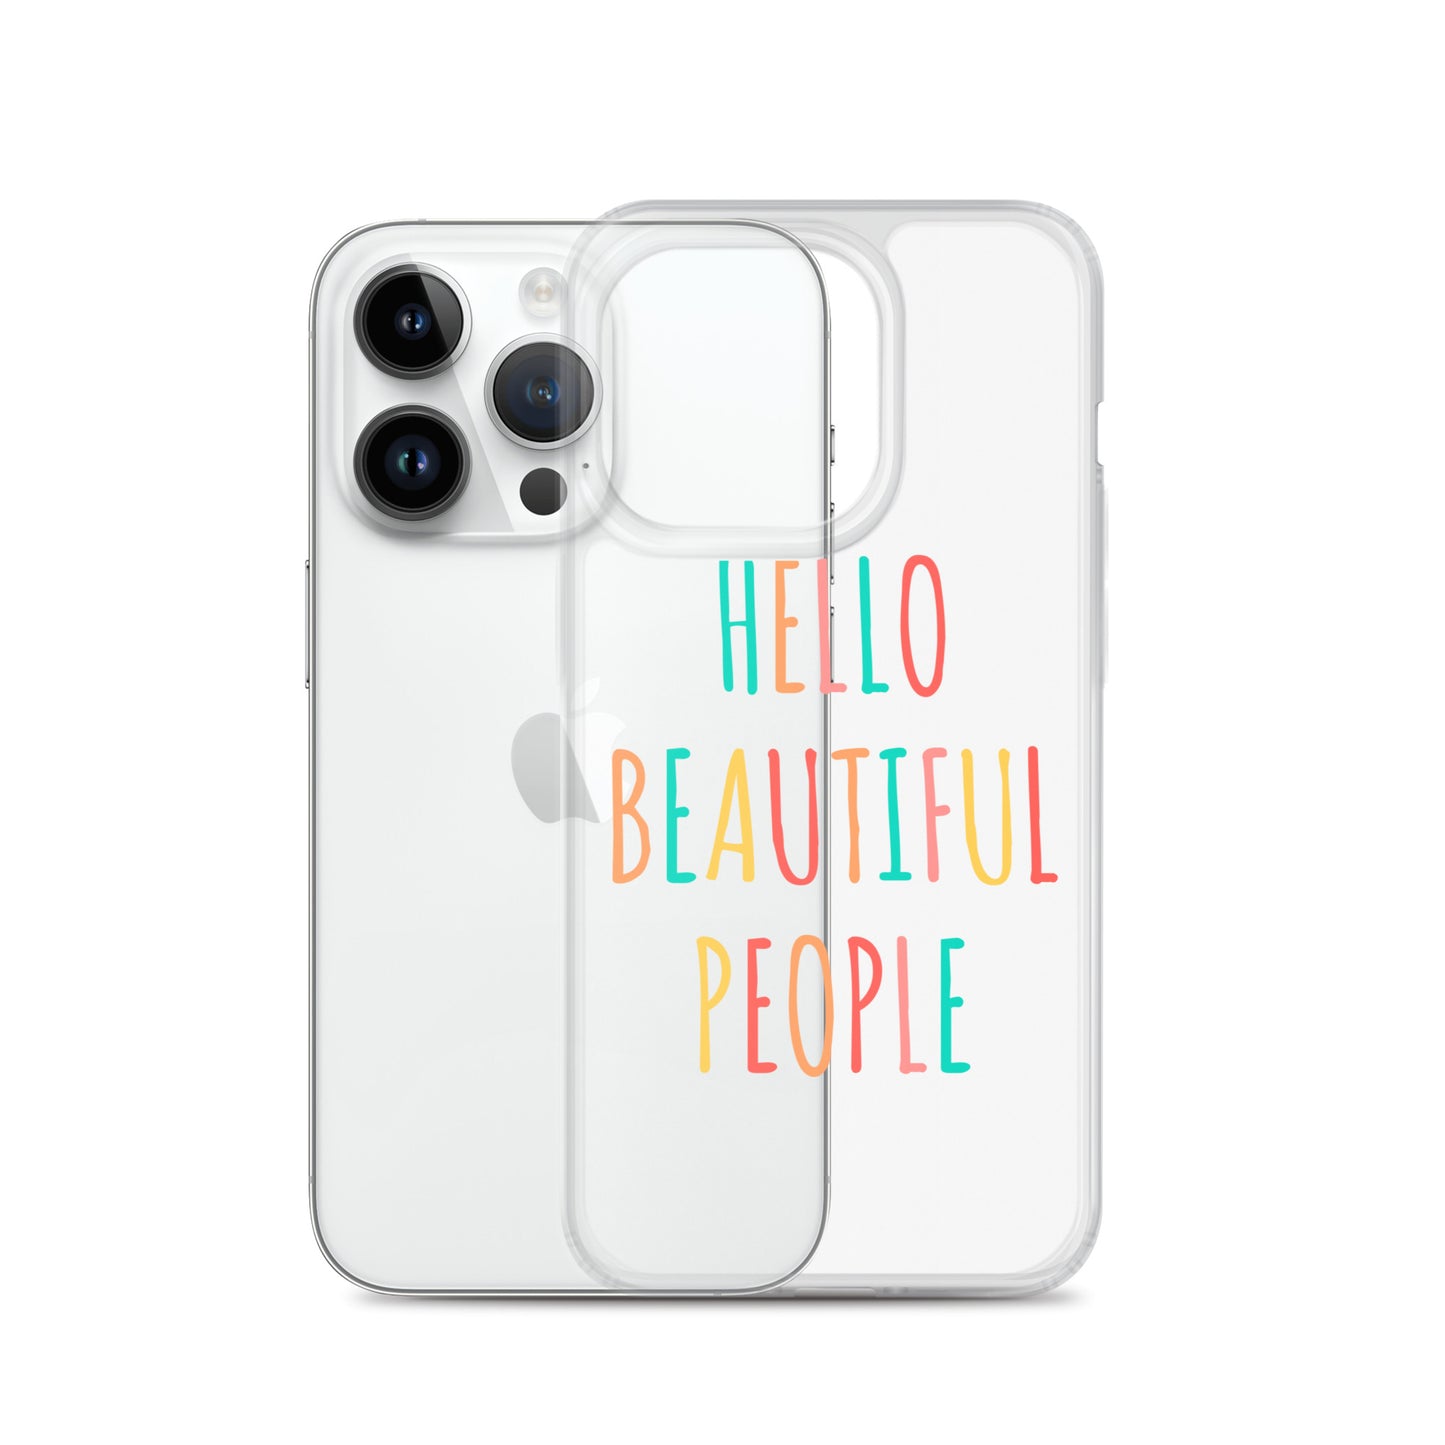 Hello Beautiful People - iPhone Case